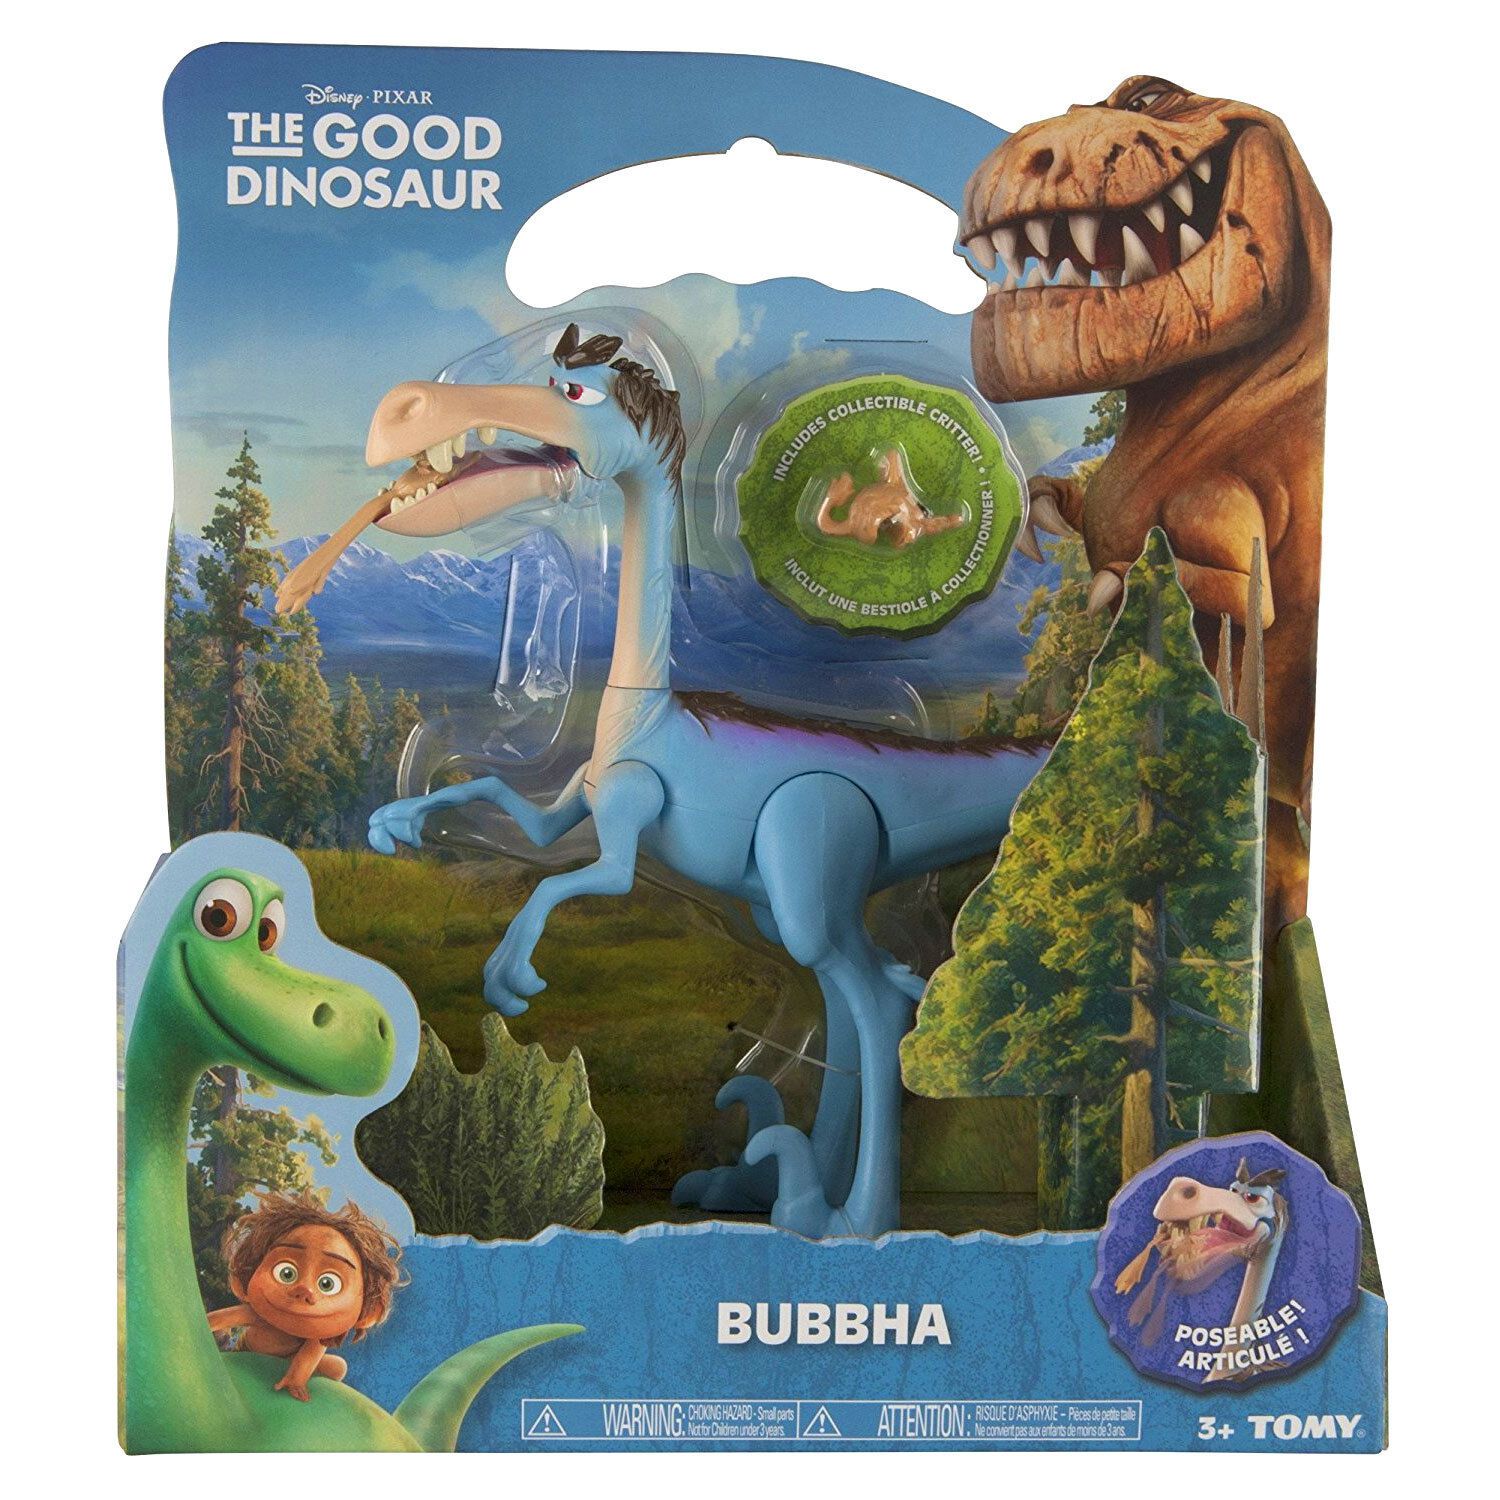  The Good Dinosaur - Bubbha (Raptor) 